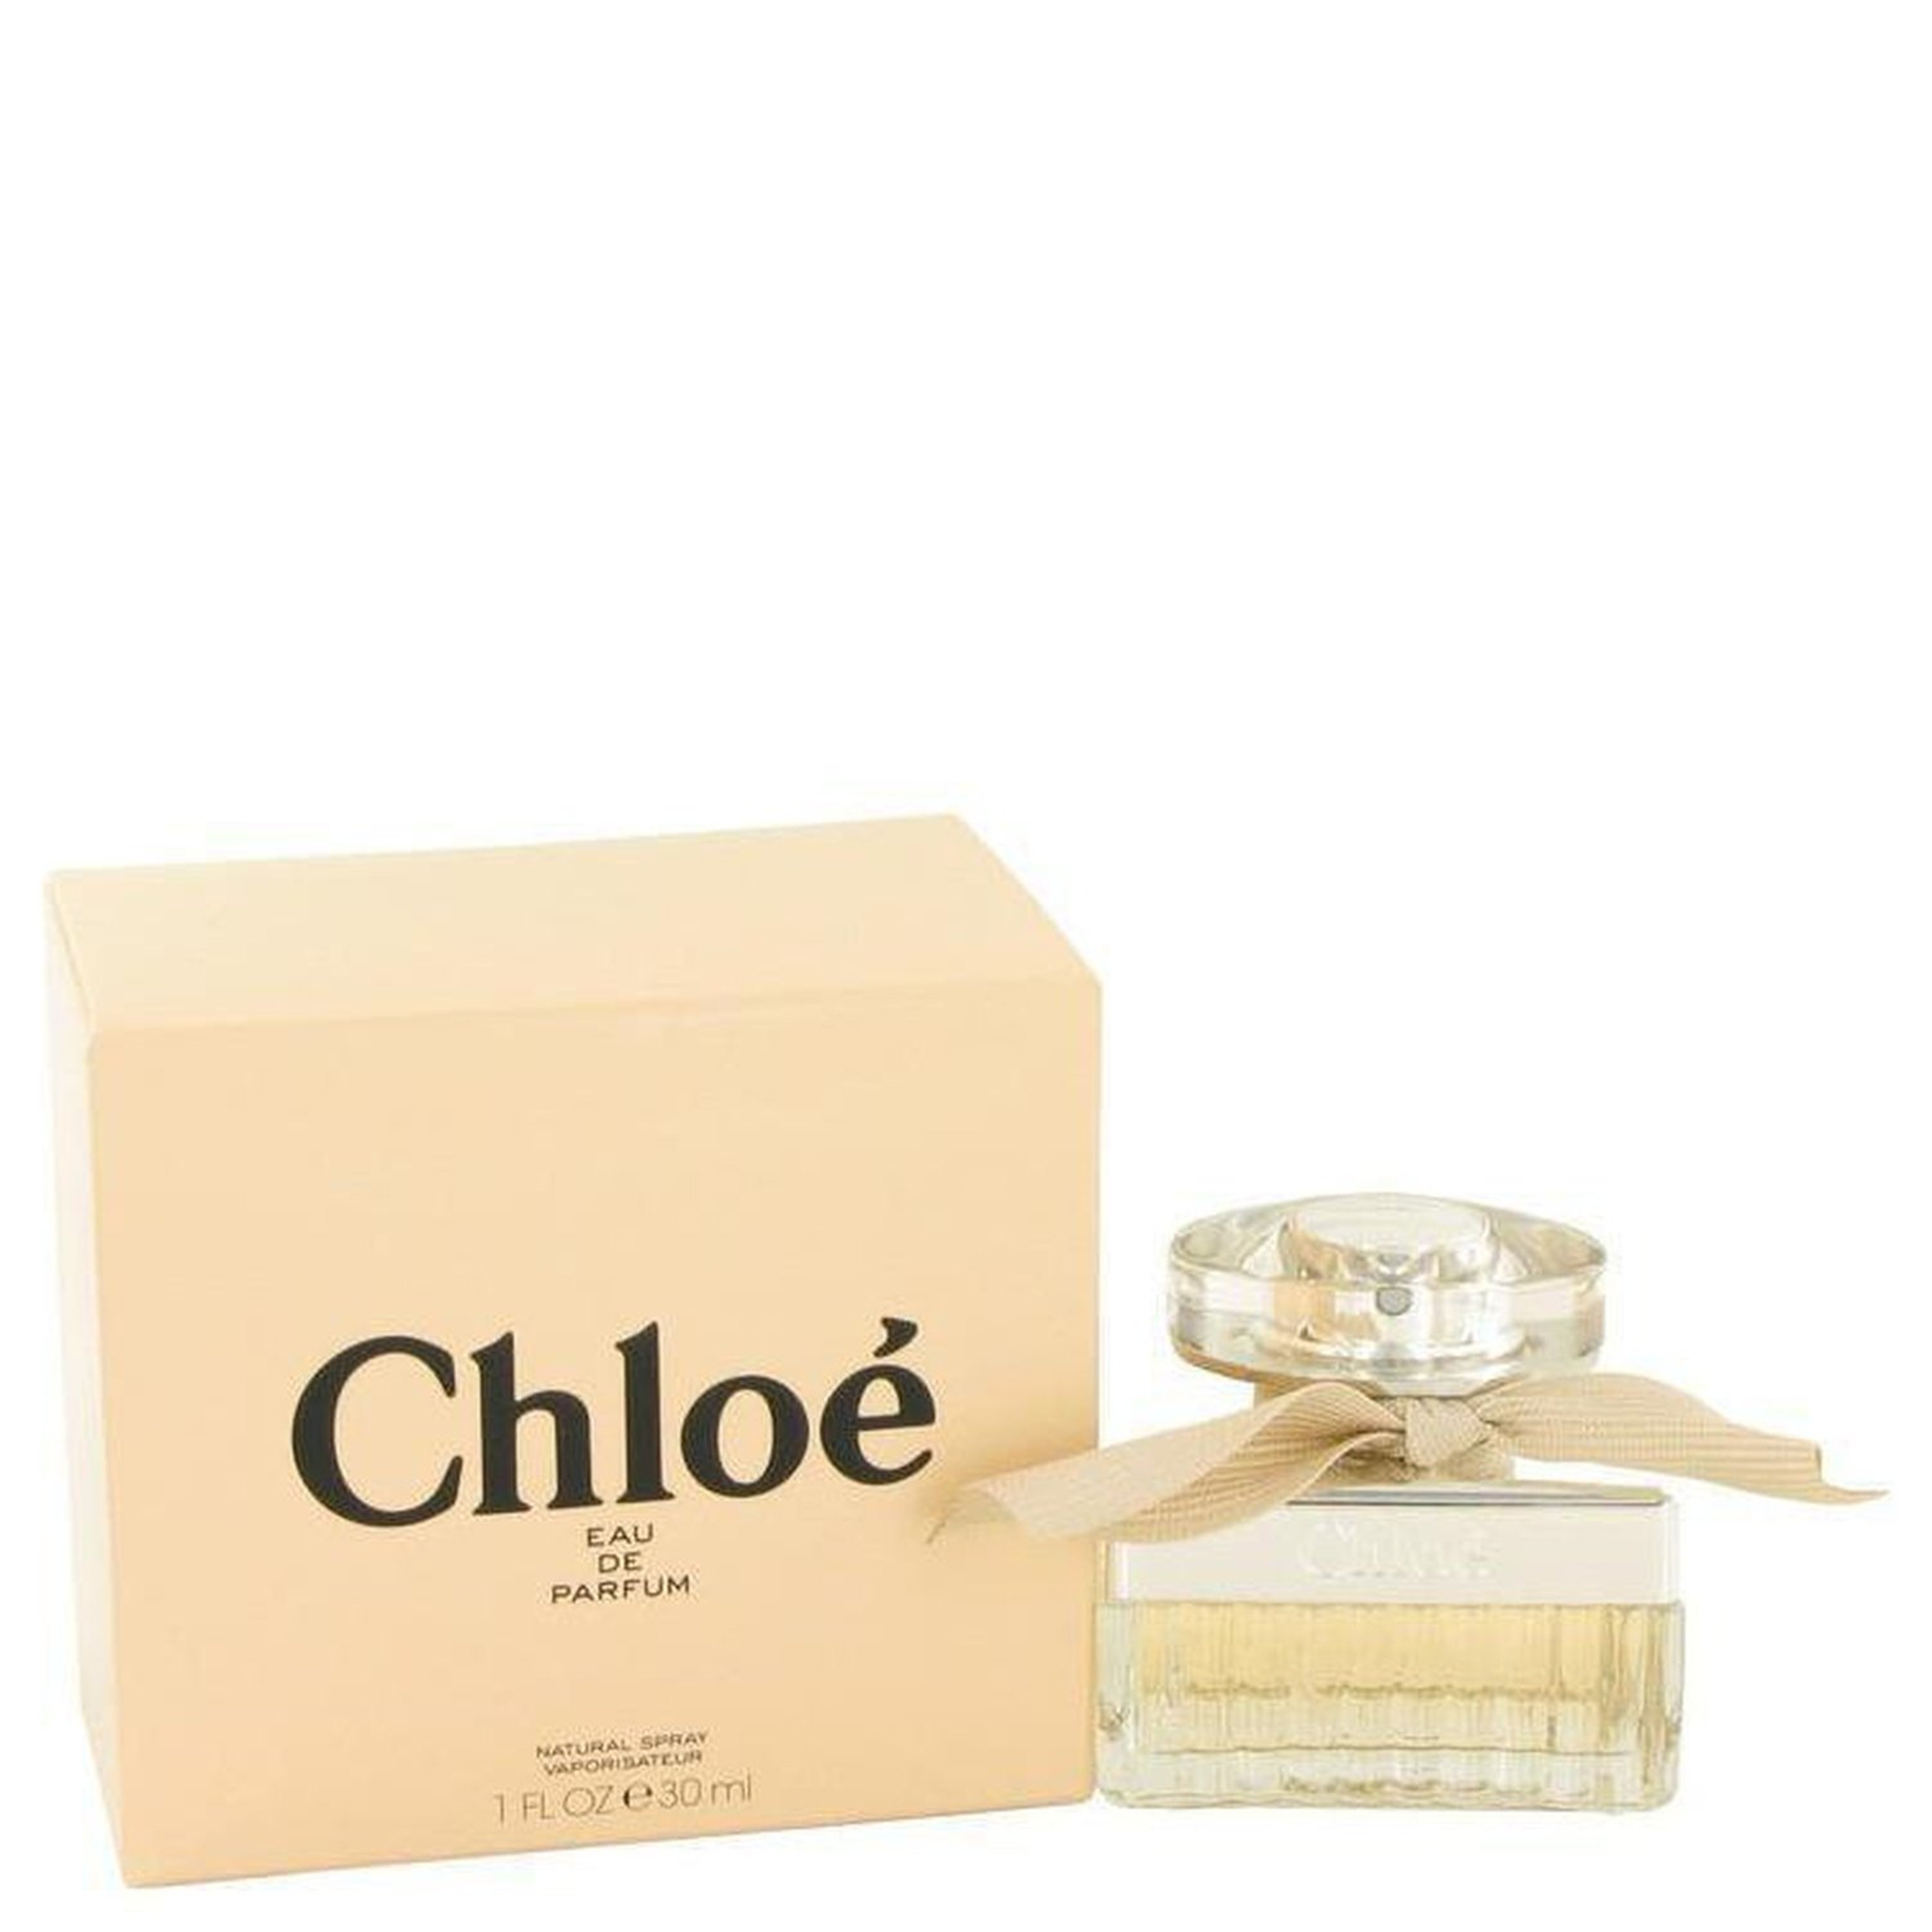 Chloé Chloe Chloe (new) Chloe Eau De Parfum Spray 1 oz |